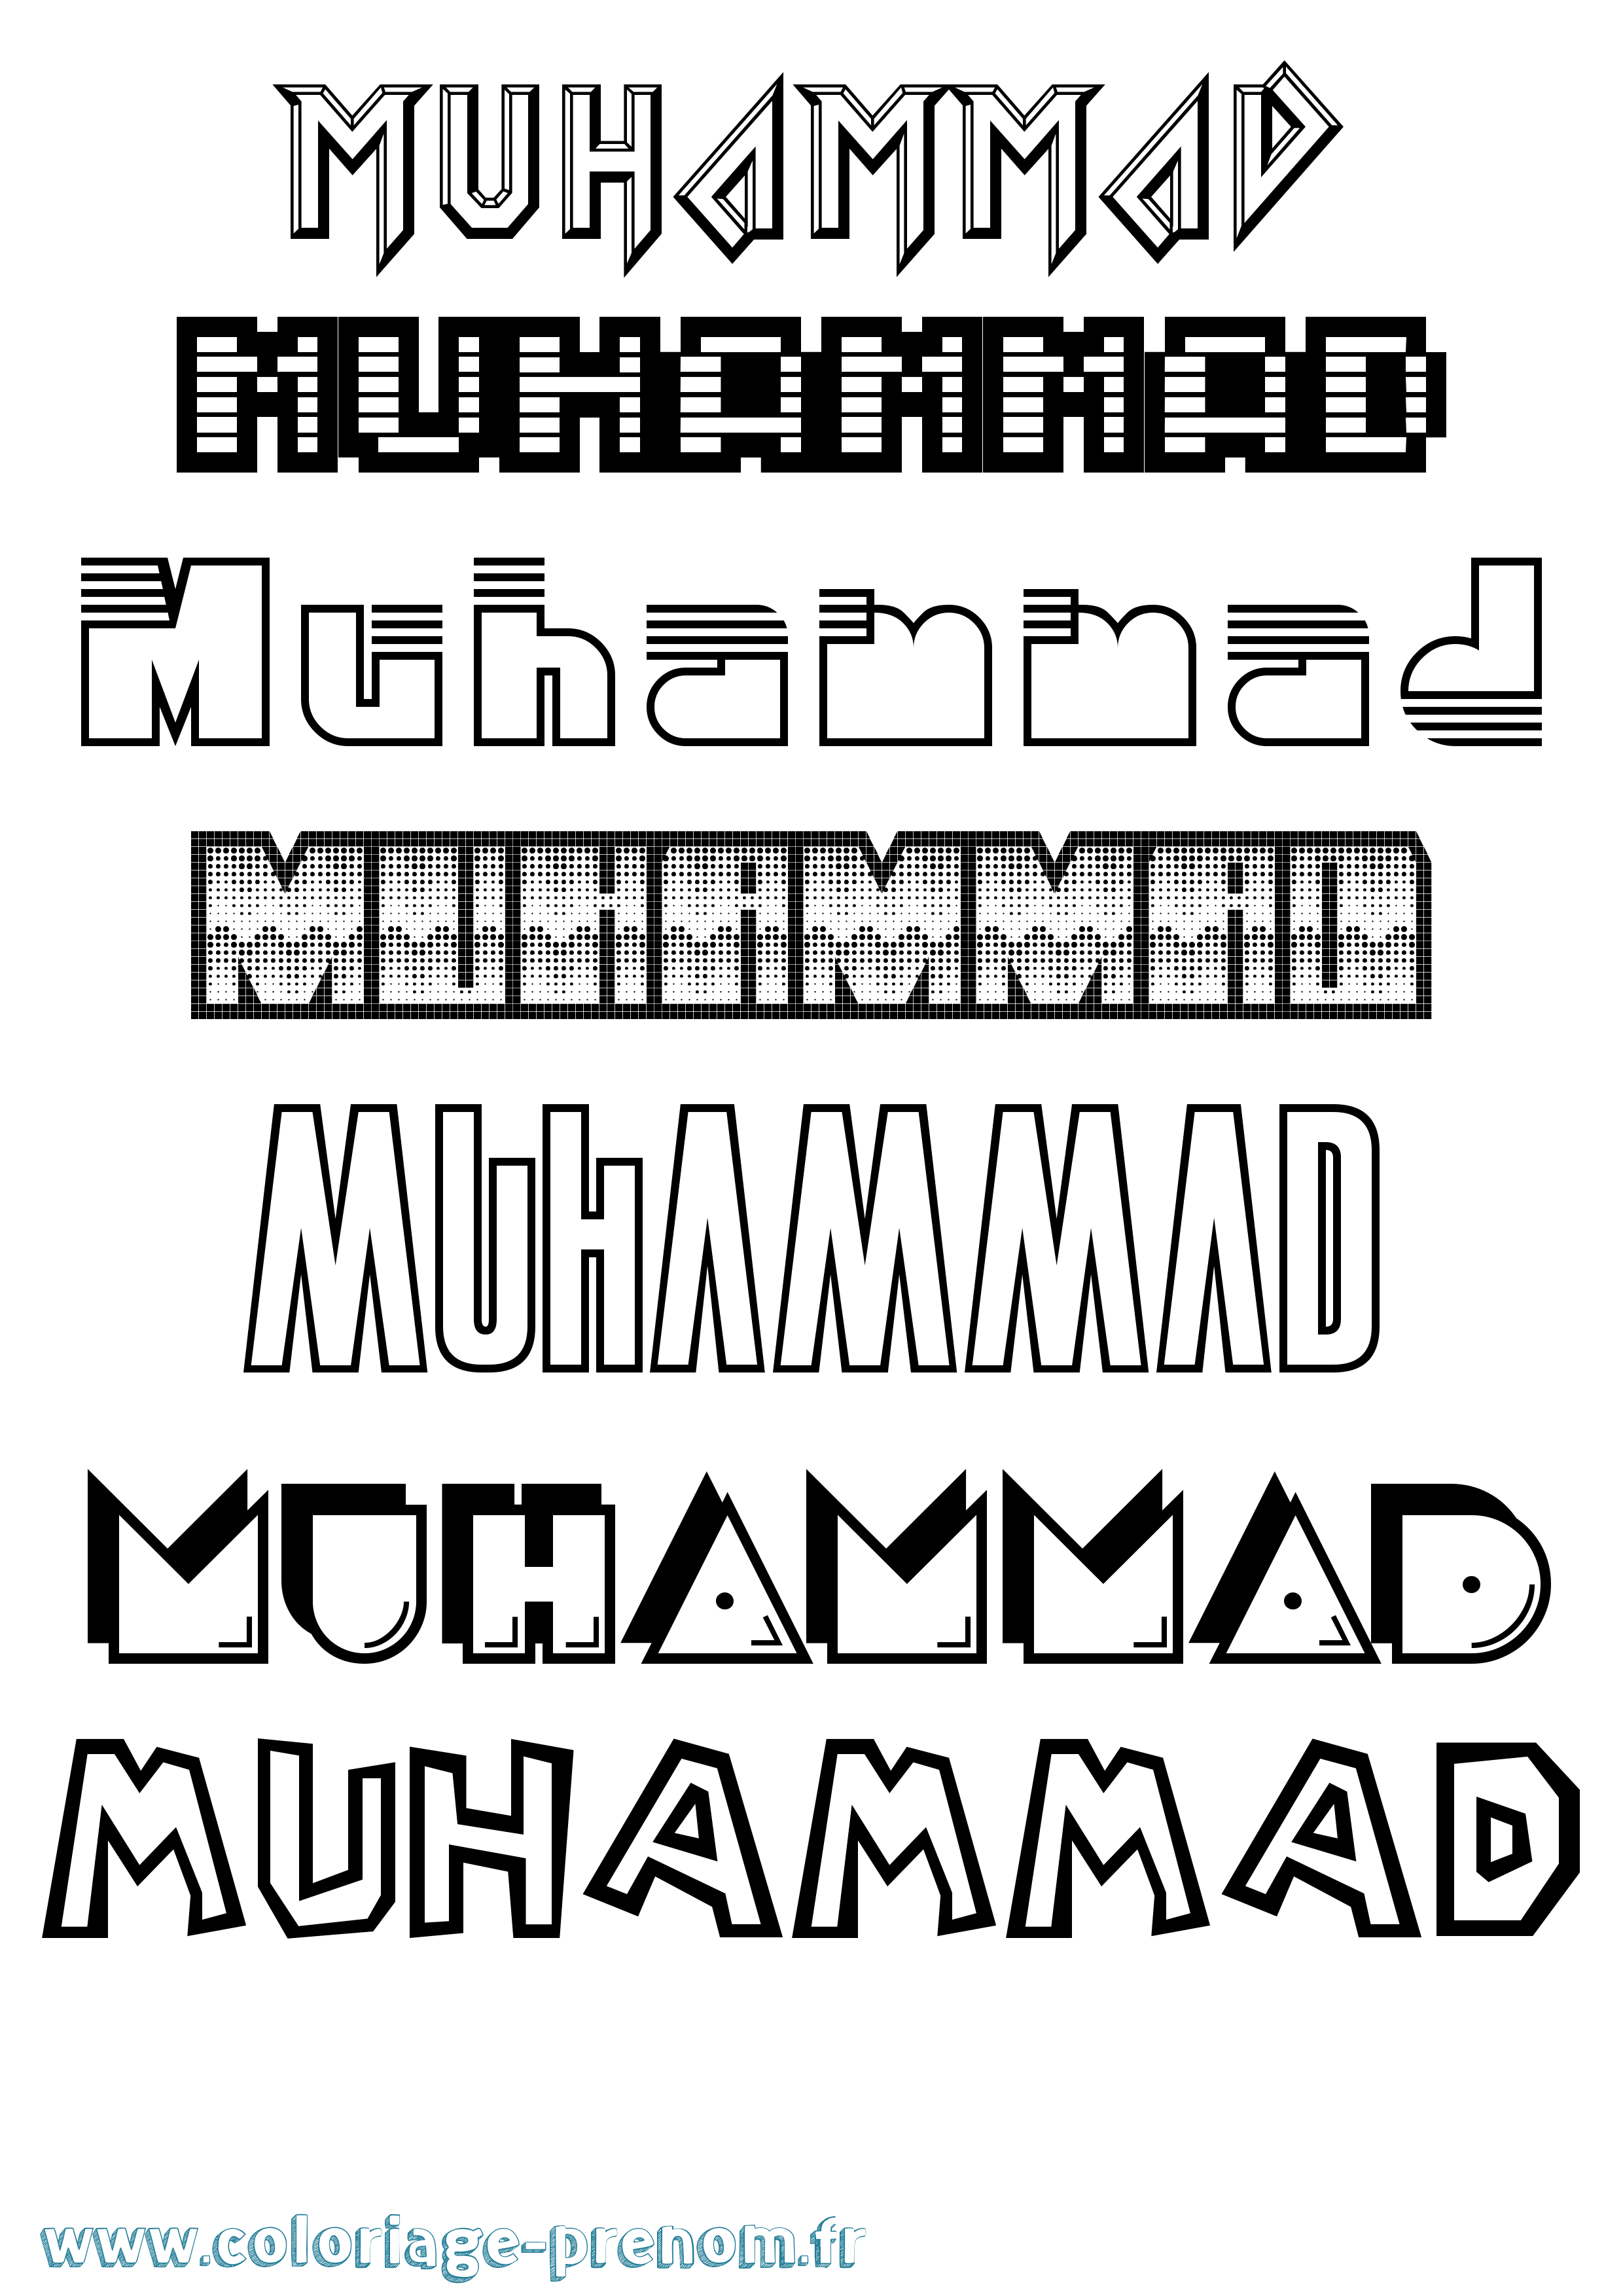 Coloriage prénom Muhammad